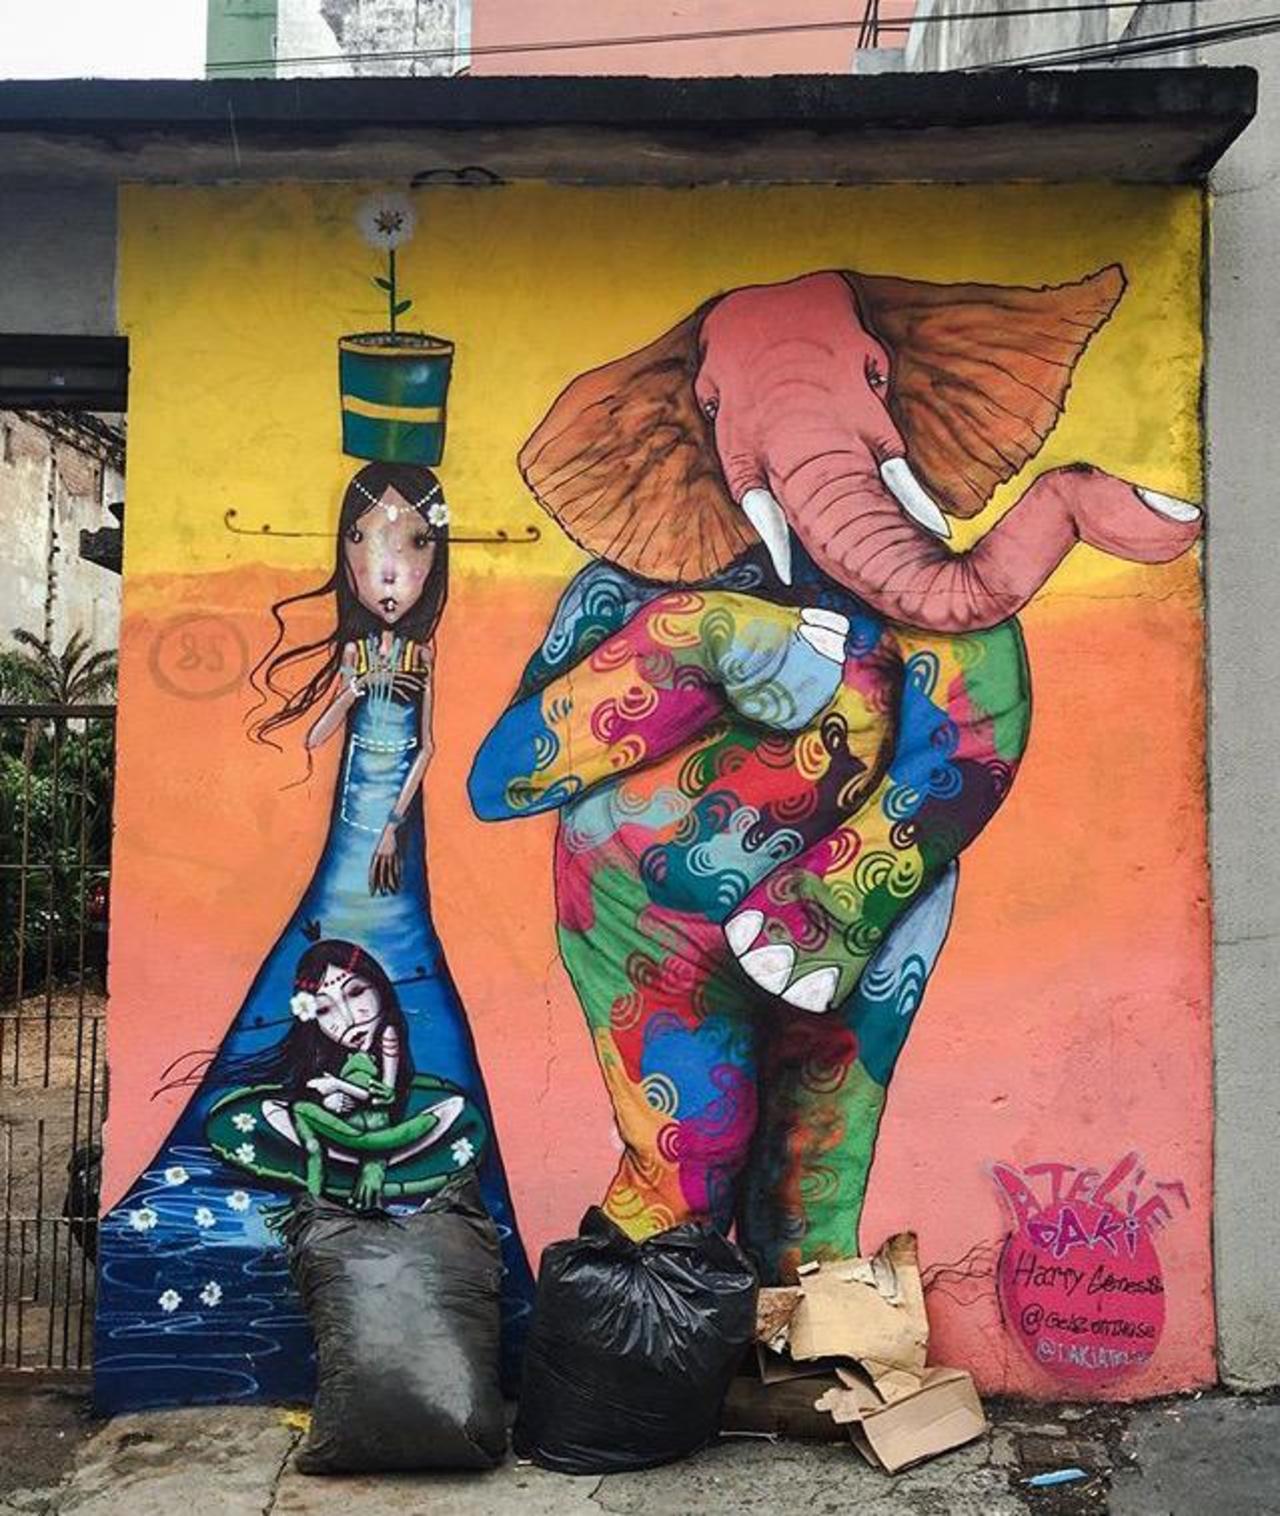 Street Art by Harry Geneis & Gelson in São Paulo 

#art #mural #graffiti #streetart http://t.co/SlLbhuMZfD … … …… http://twitter.com/GoogleStreetArt/status/648016473831645184/photo/1/large?utm_source=fb&utm_medium=fb&utm_campaign=charlesjackso14&utm_content=648018143269527552